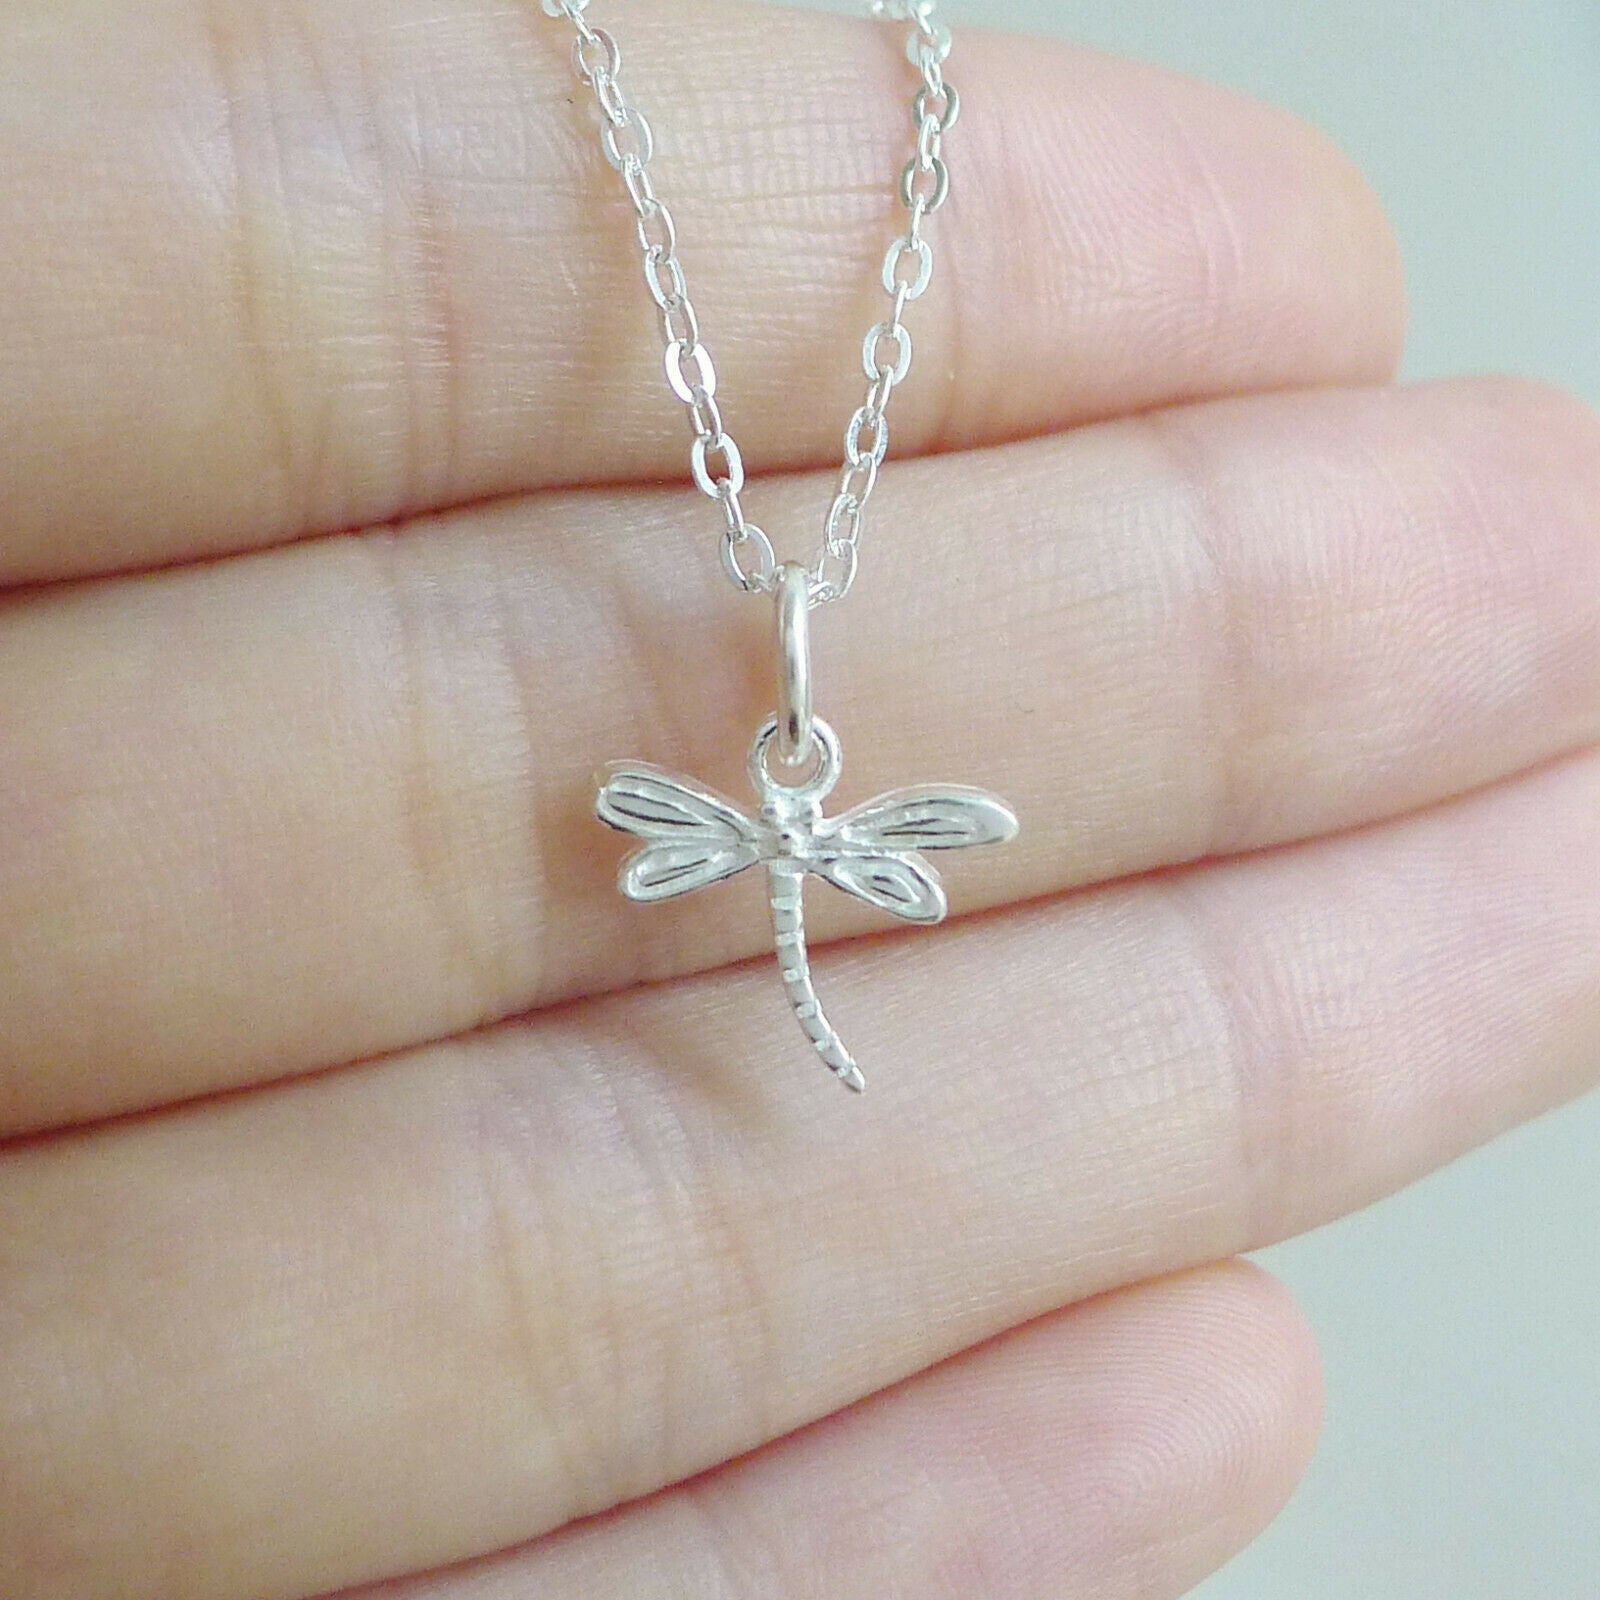 Sterling Silver Dragonfly Pendant For Necklace Bracelet Earrings - sugarkittenlondon